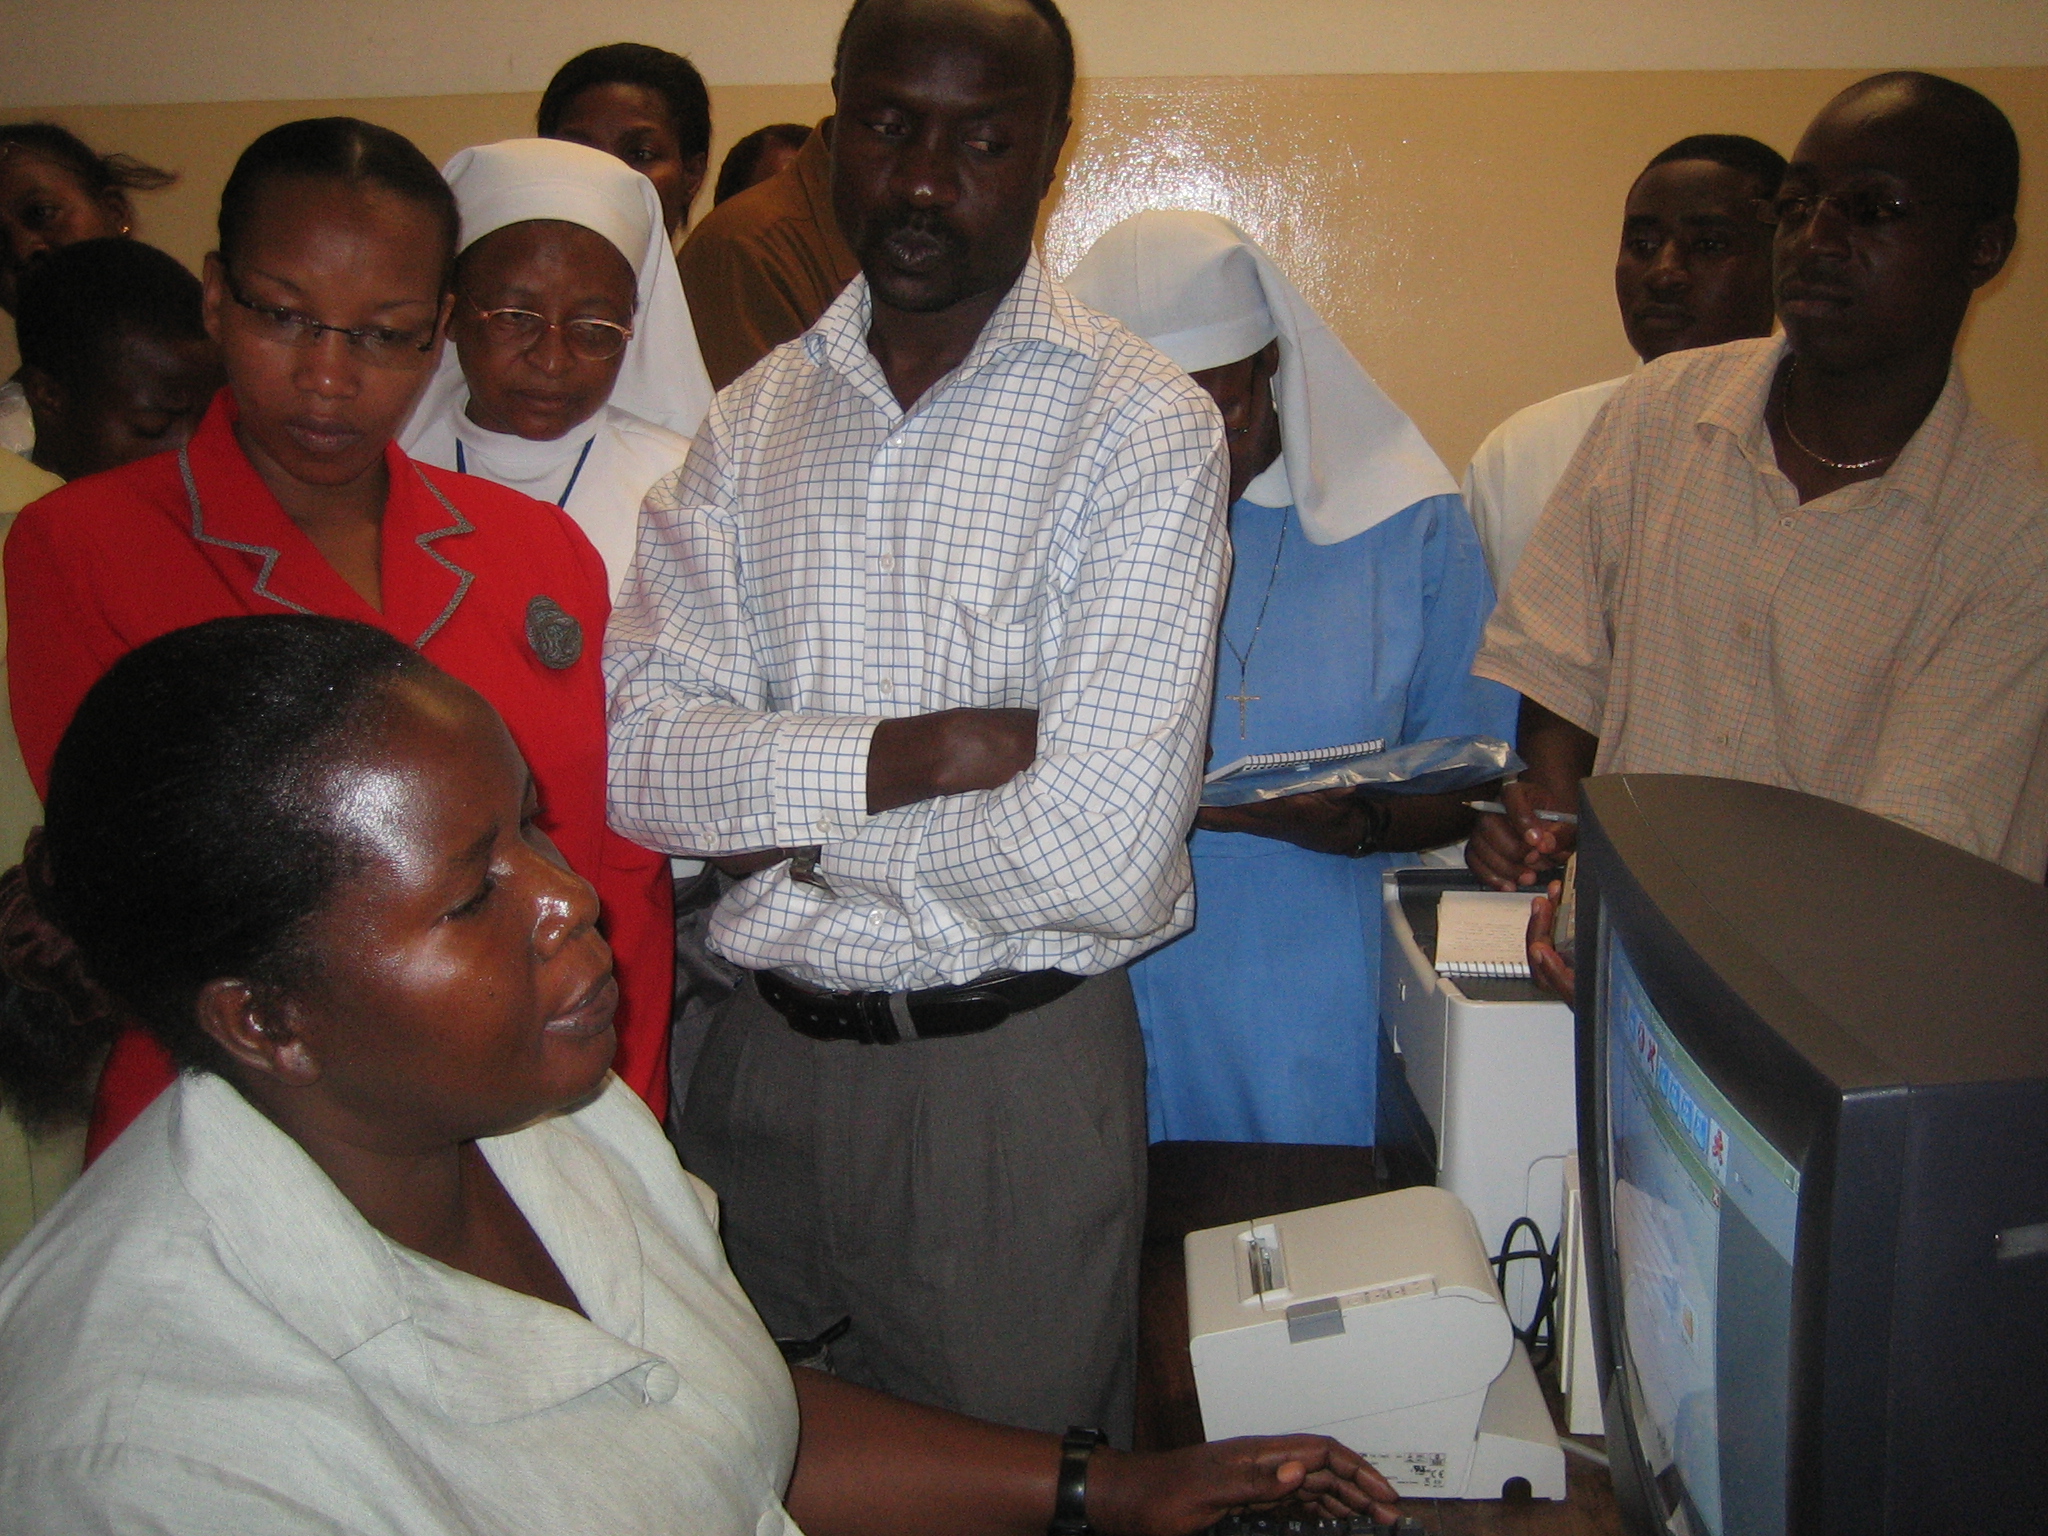 Tanzania hospital information mgt system.jpg